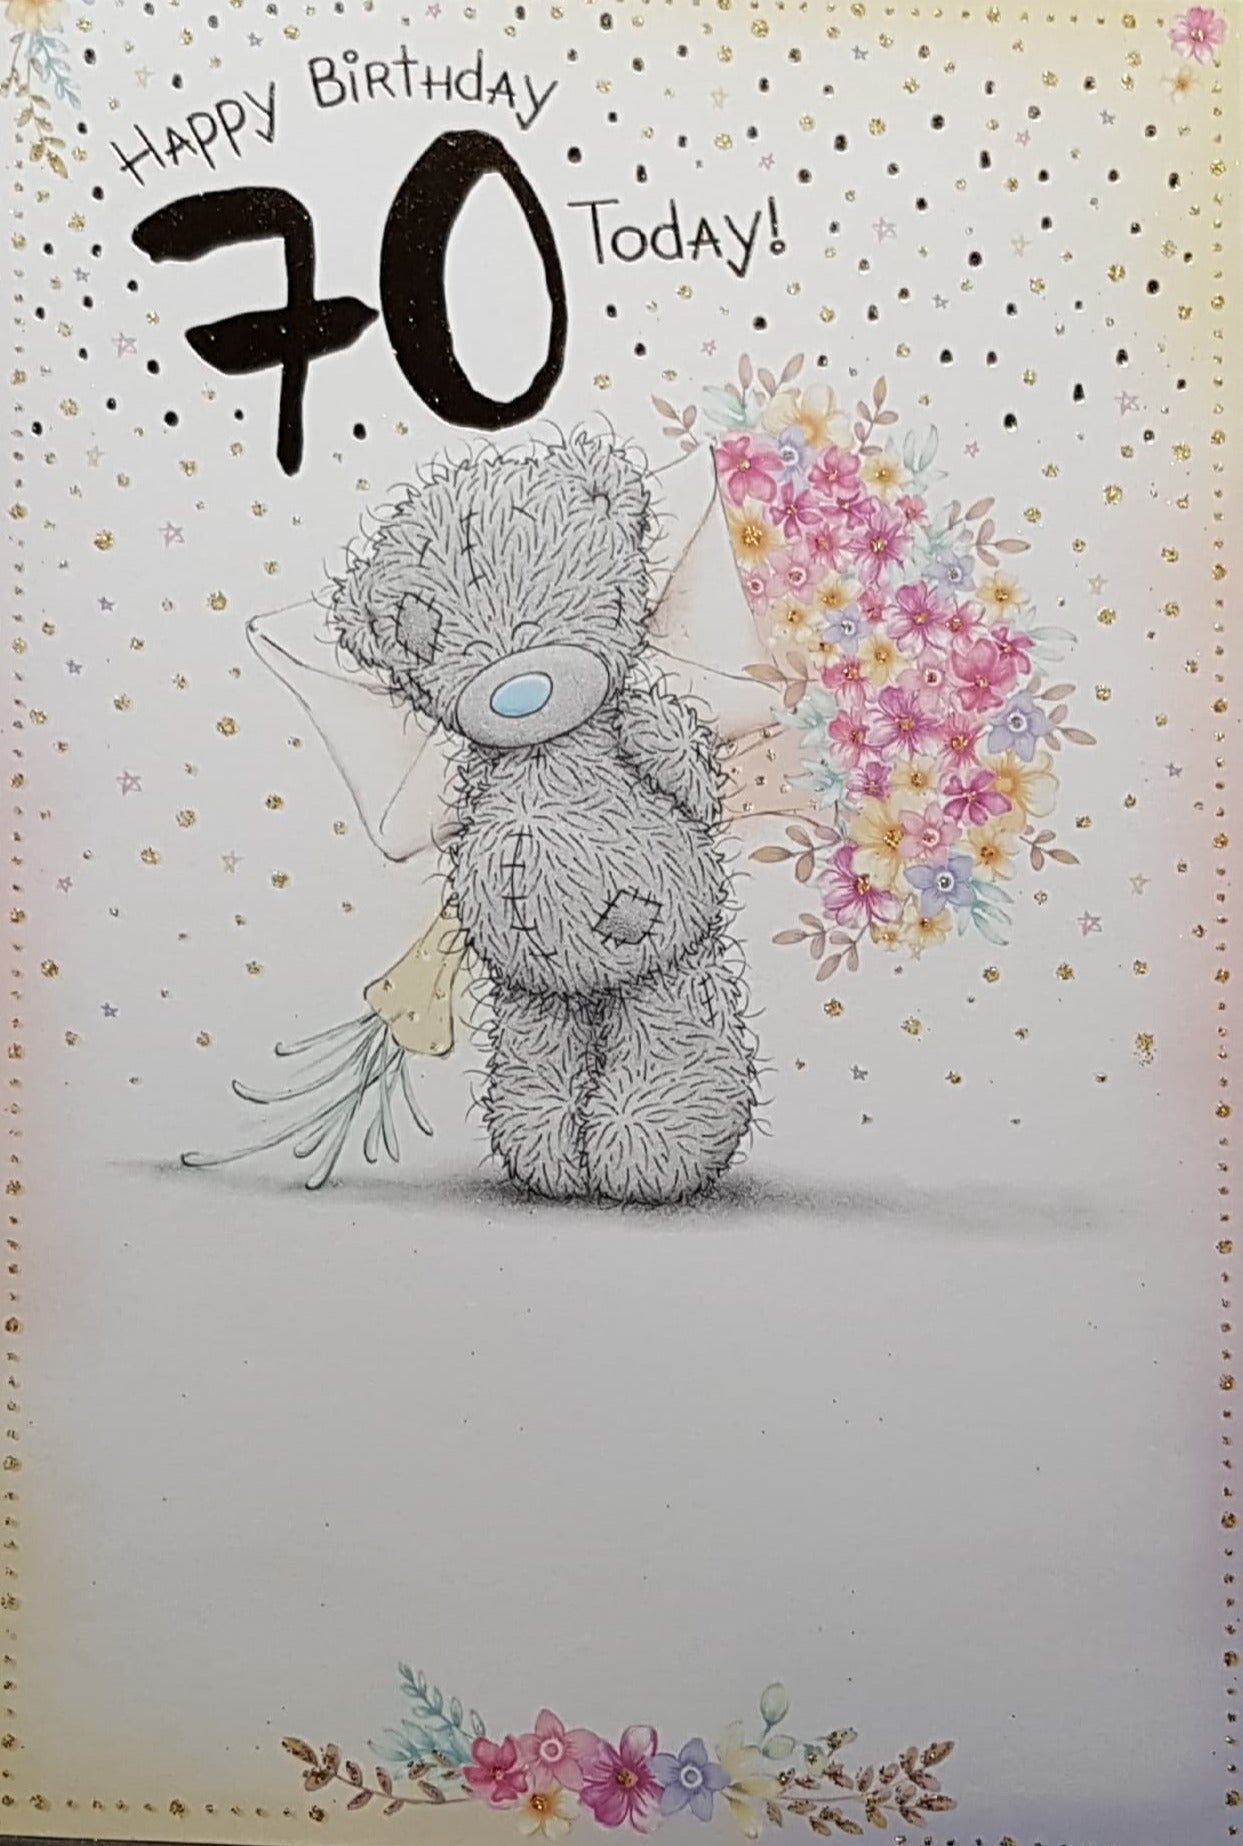 Age 70 Birthday Card - Cute Teddy Holding A Bouquet Of Flowers